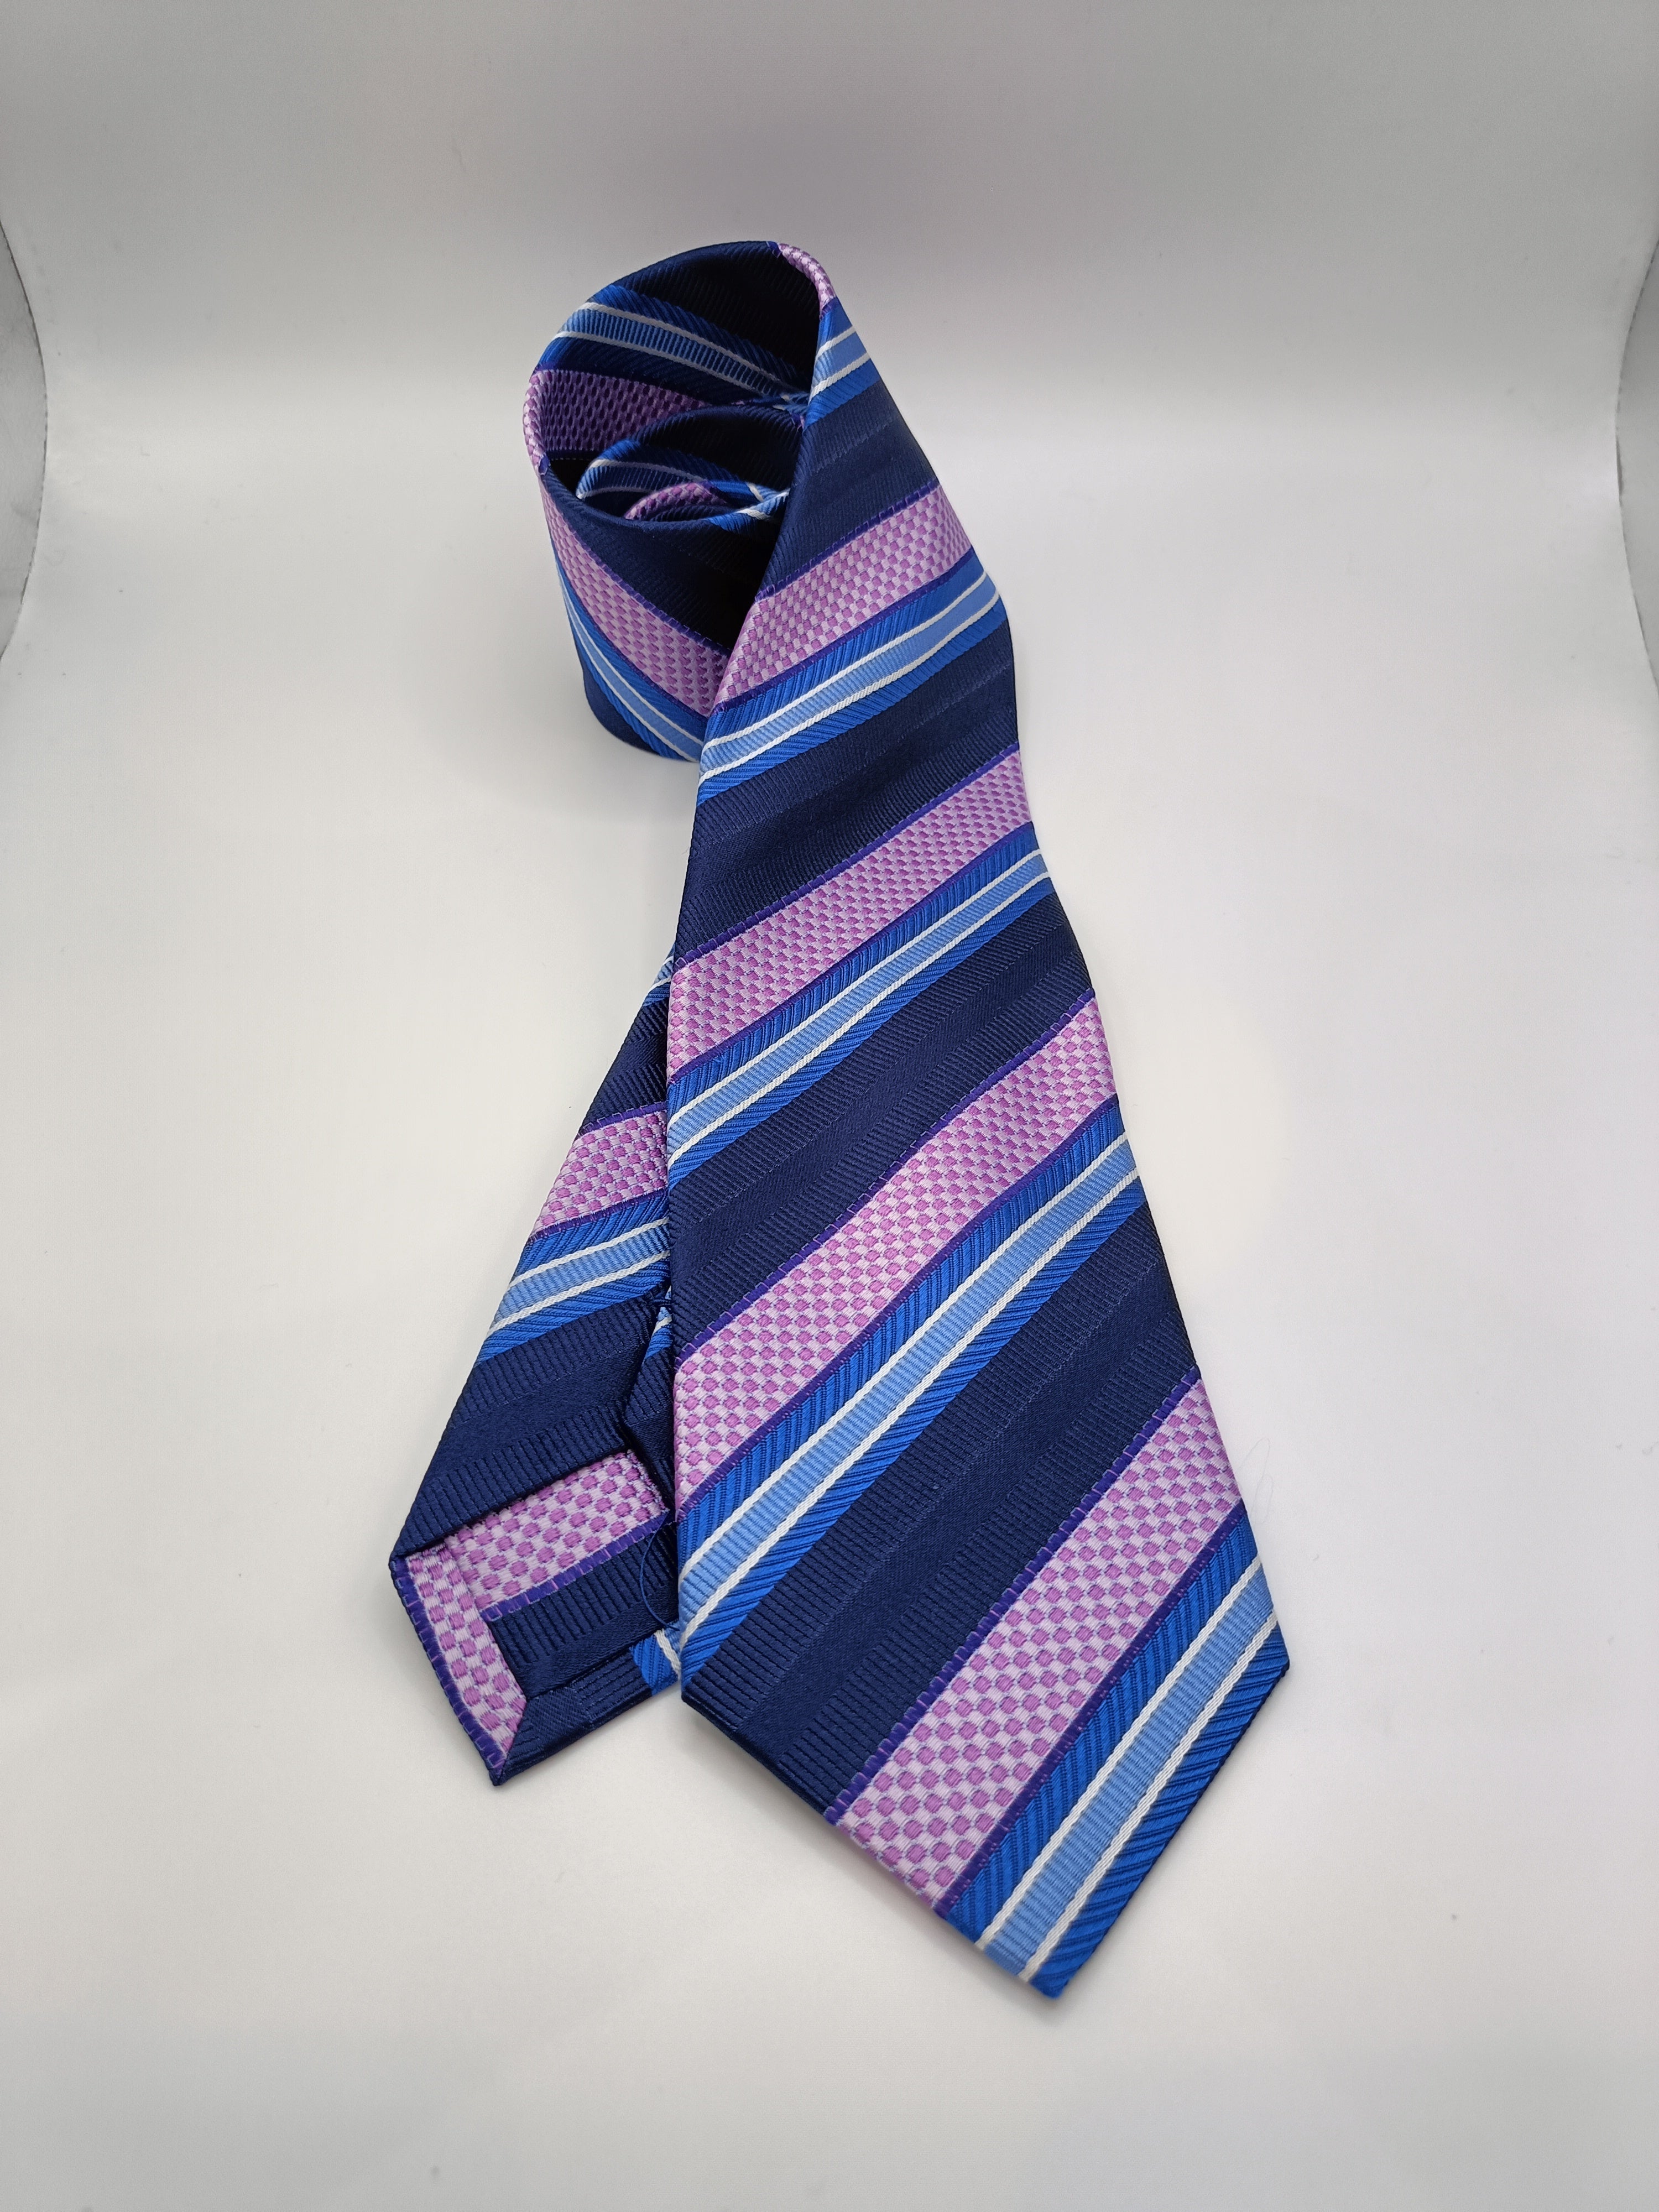 Pure silk three fold tie, handmade in Italy by Italian tailors.100% Pure silk